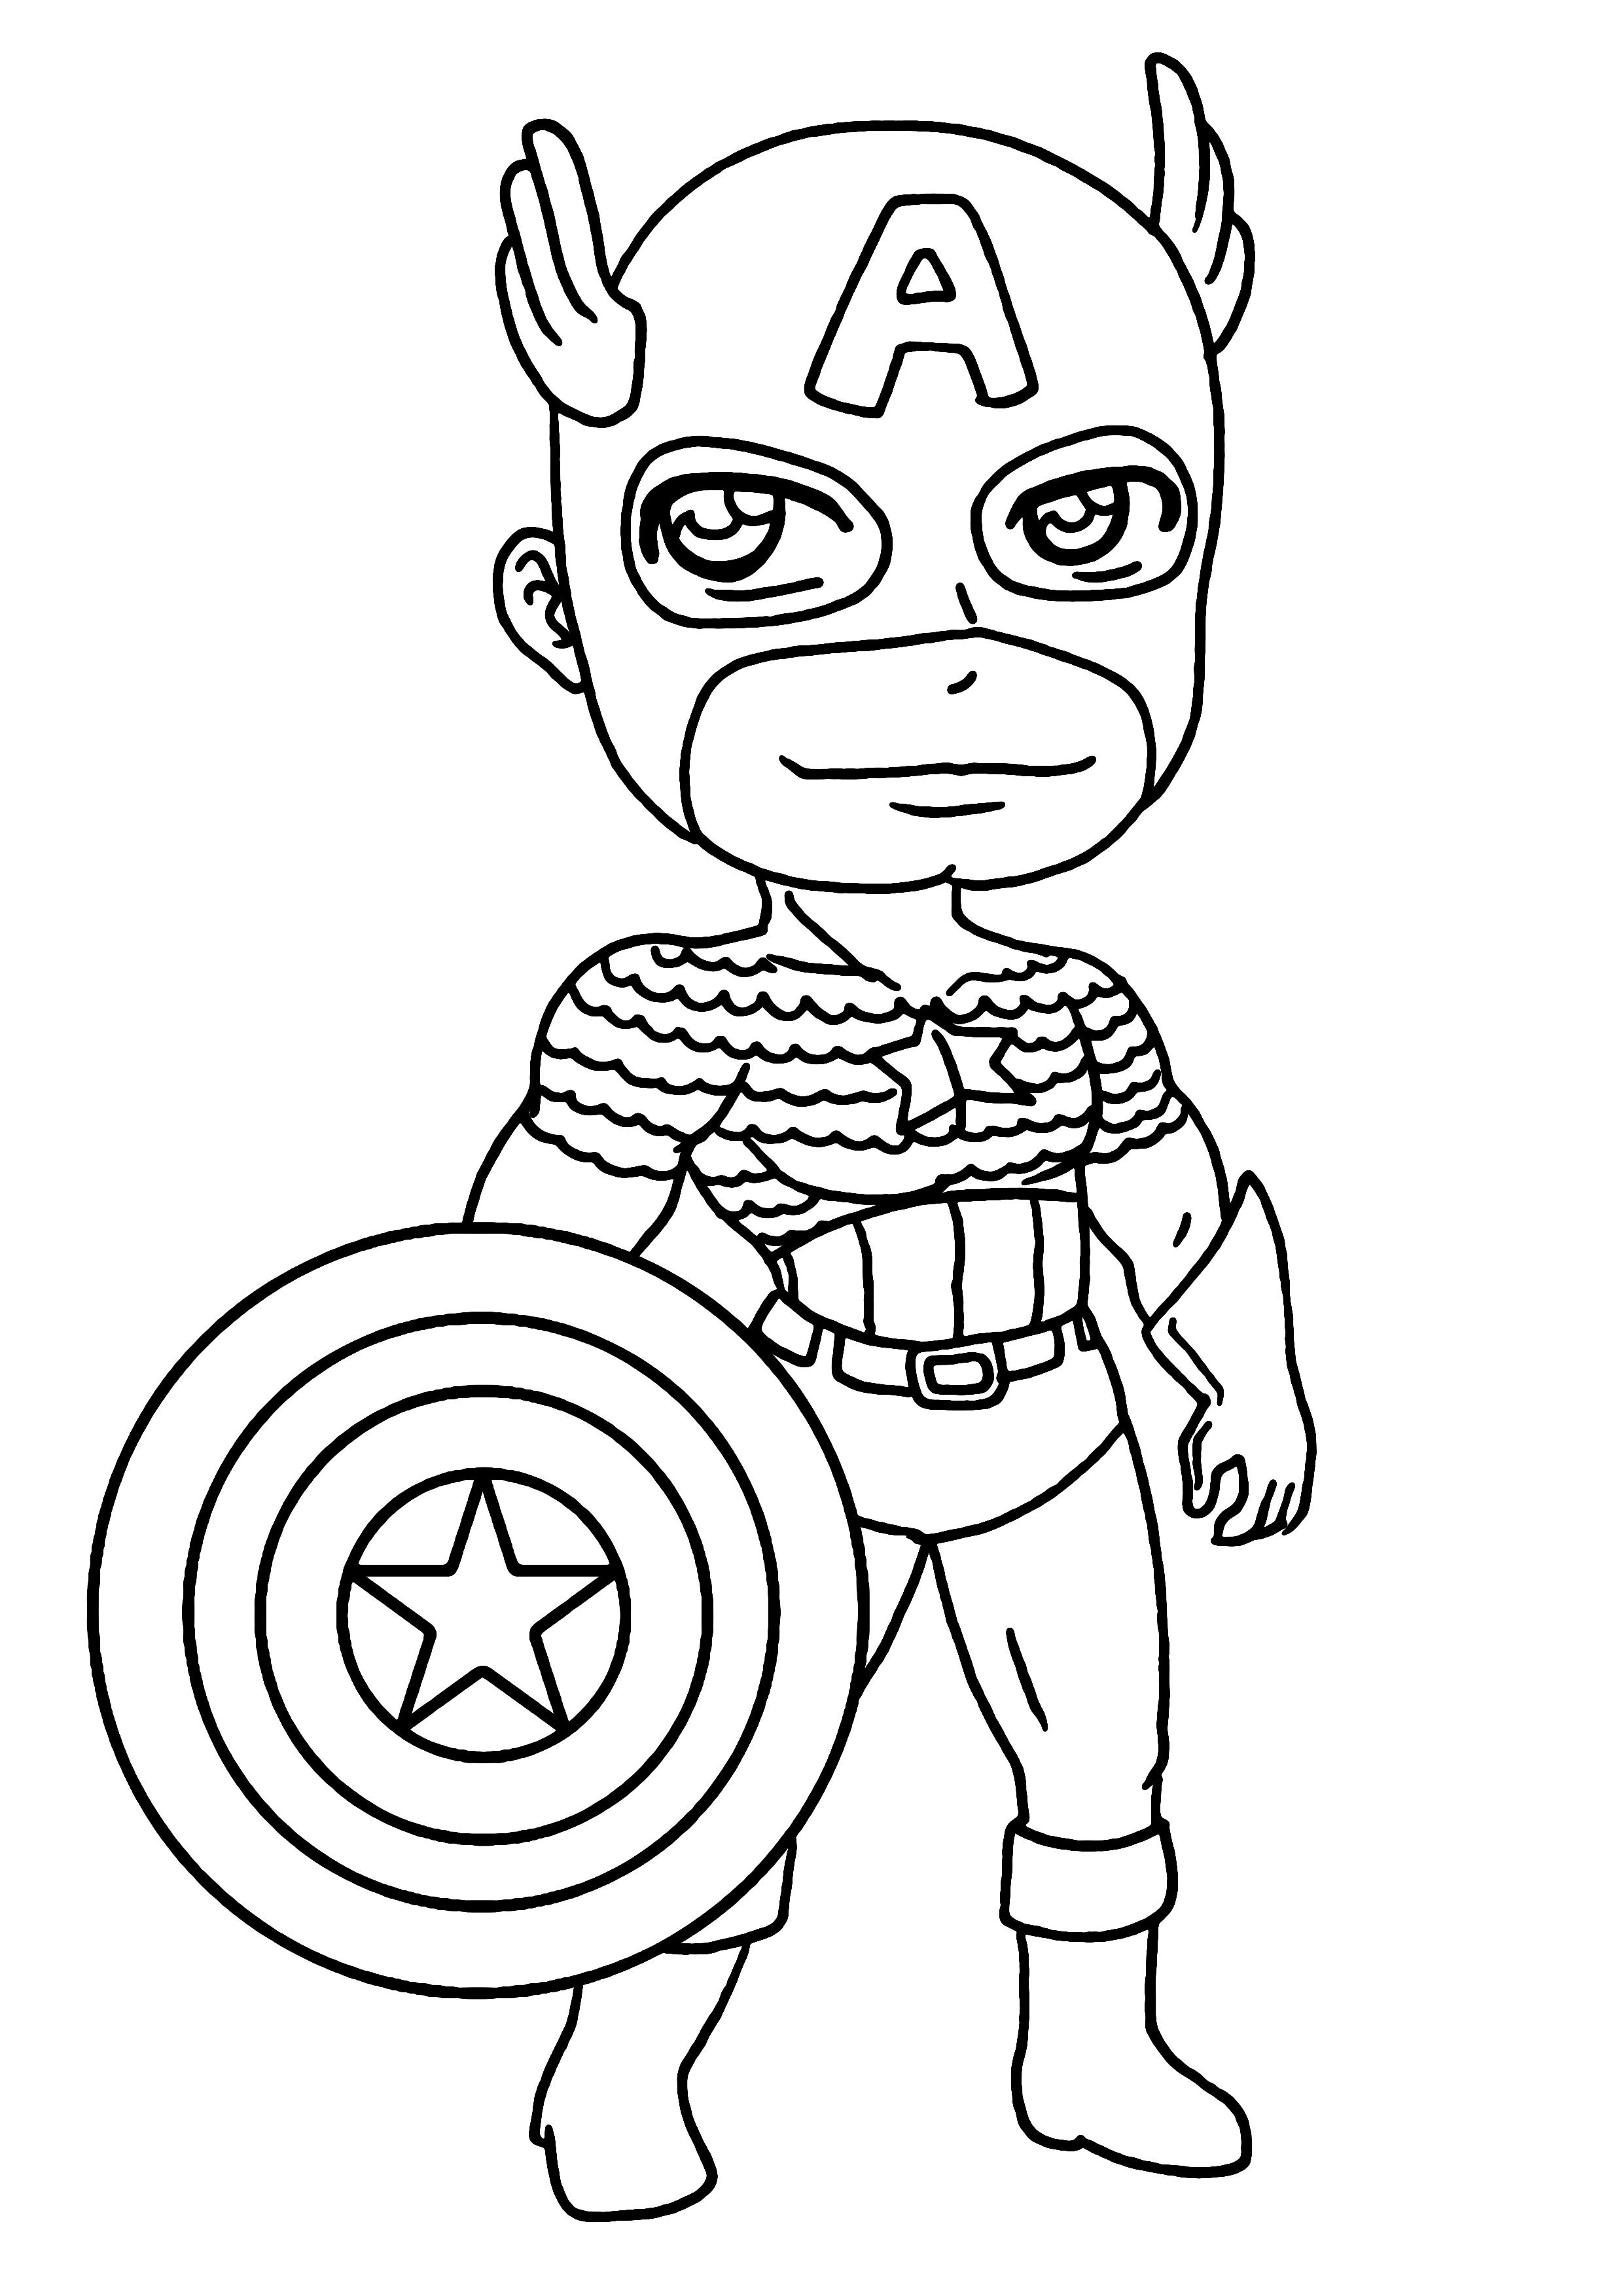 Marvel Super Heroes 79653 (Superheroes) Printable coloring pages